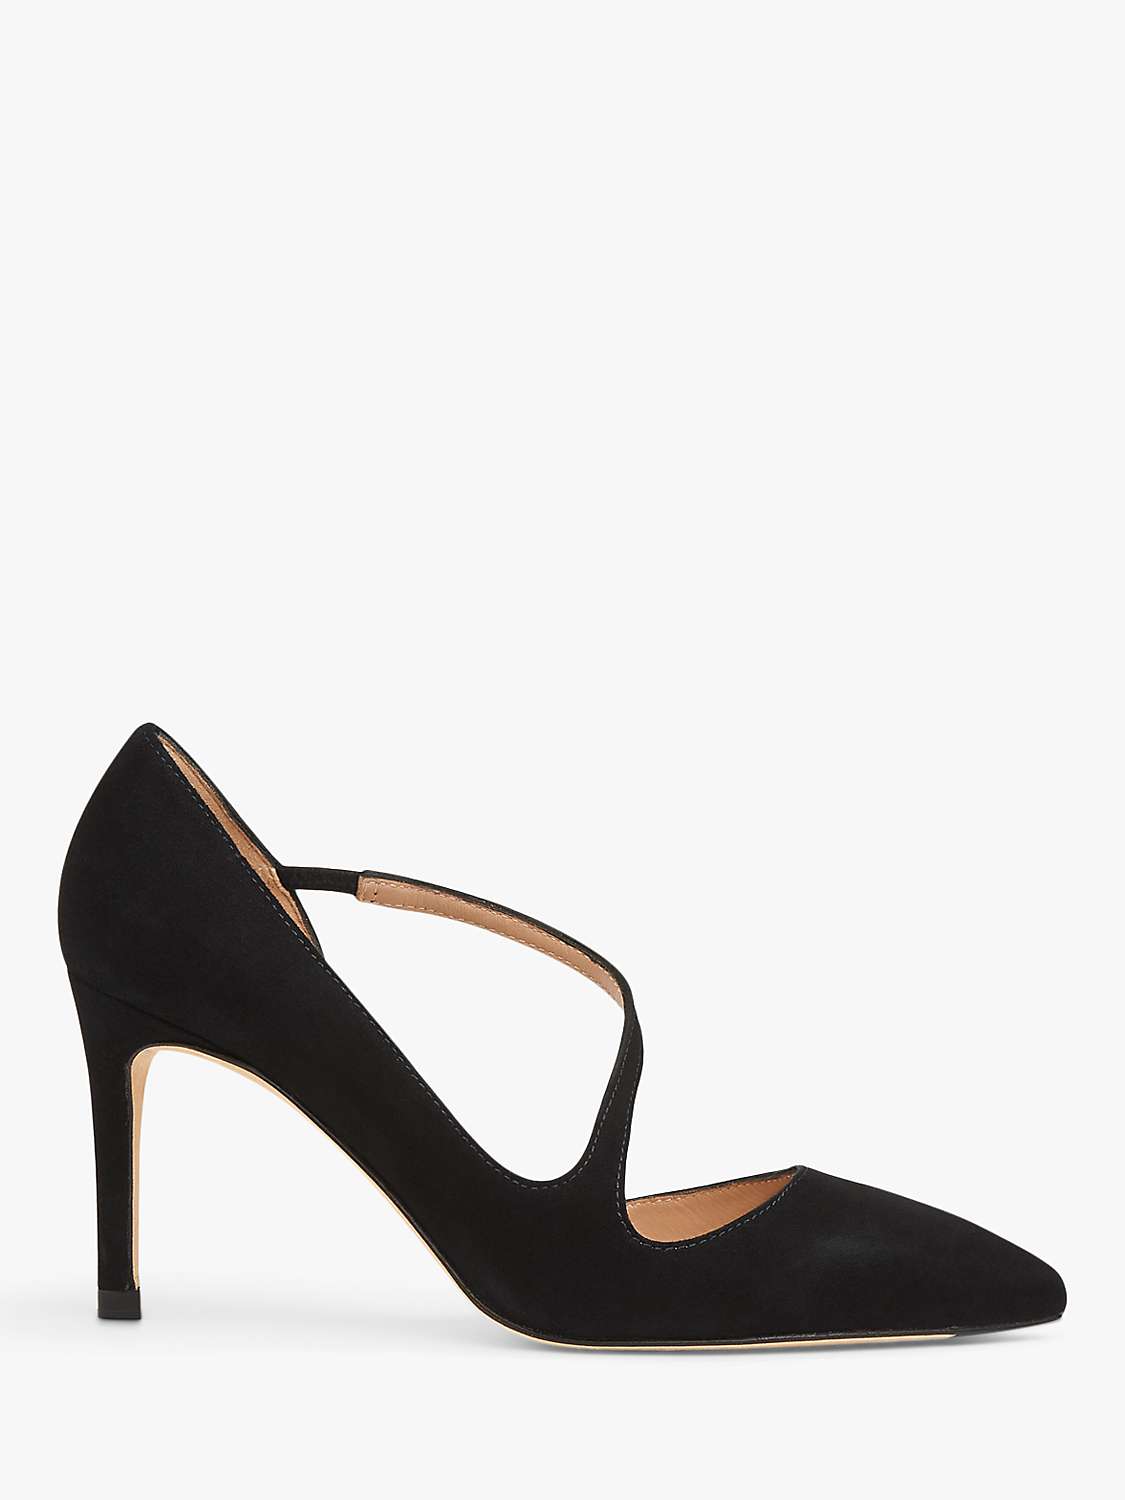 Buy L.K.Bennett Heather Suede D'Orsay Court Shoes, Black Online at johnlewis.com